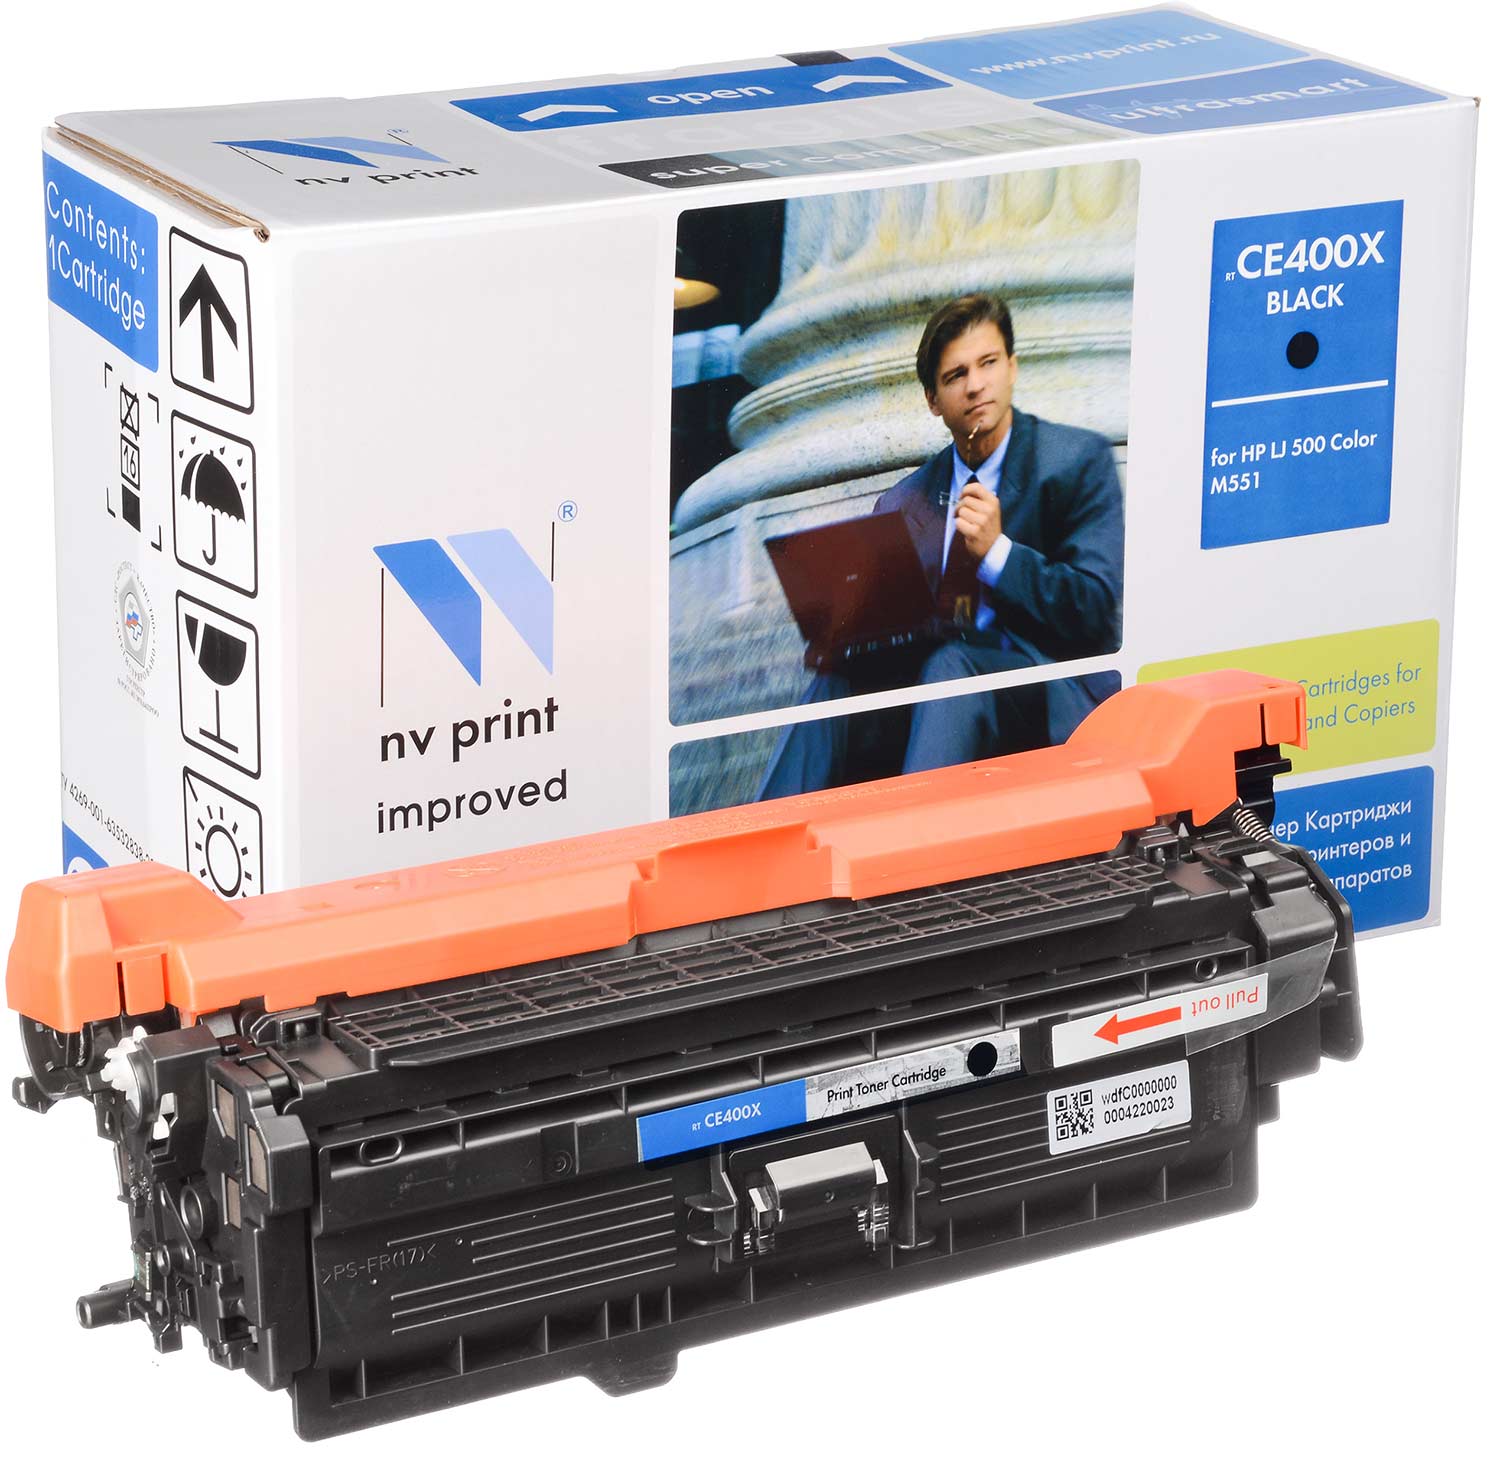 Картридж HP NV-Print (CE400X Black) (11,0К) для LJ Enterprise 500 M551/570/575 черный